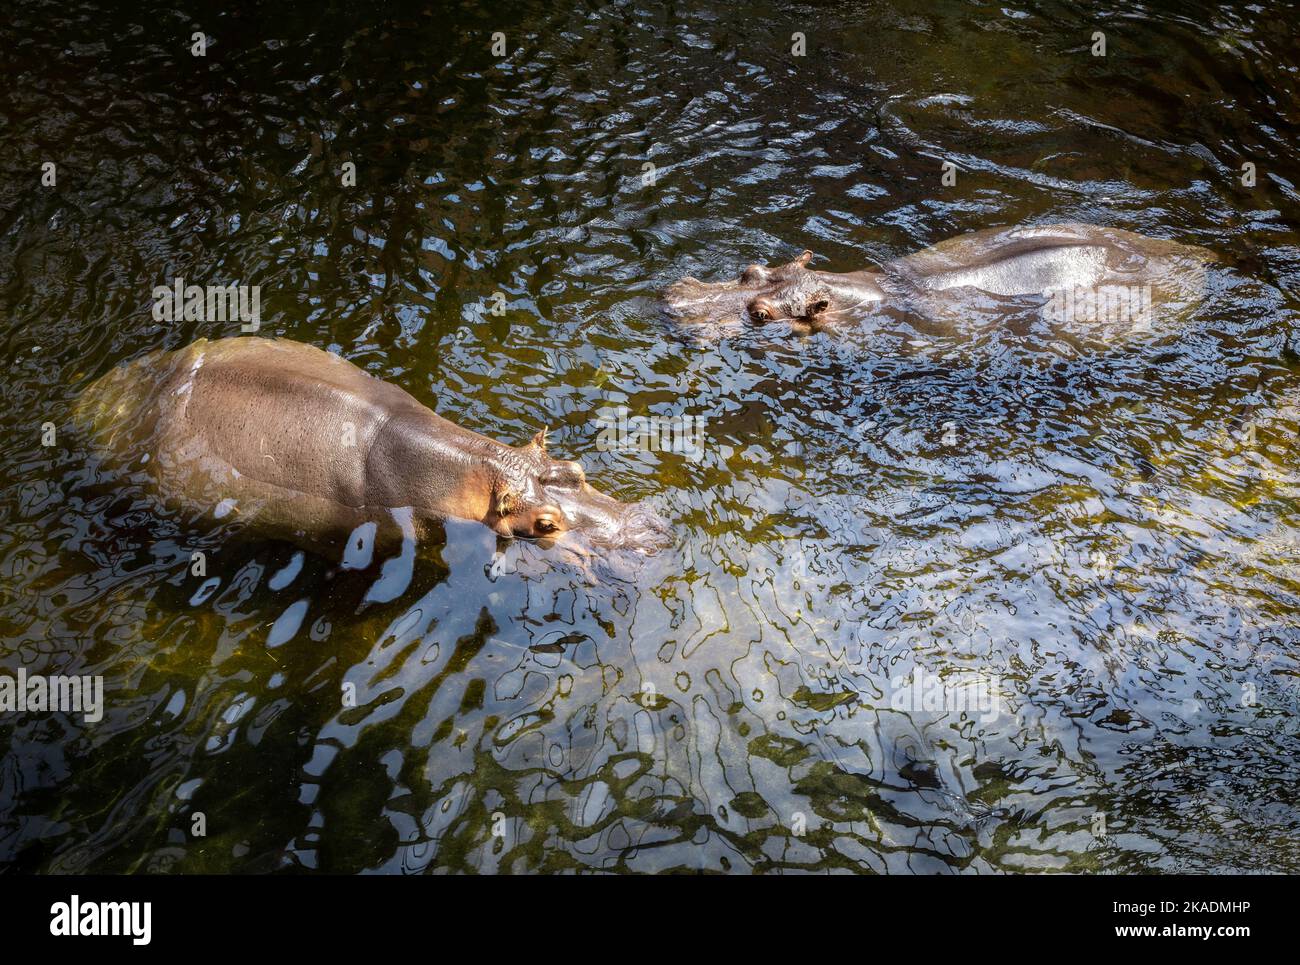 Two hippos (Hippopotamus amphibius) swimming in the water. Stock Photo